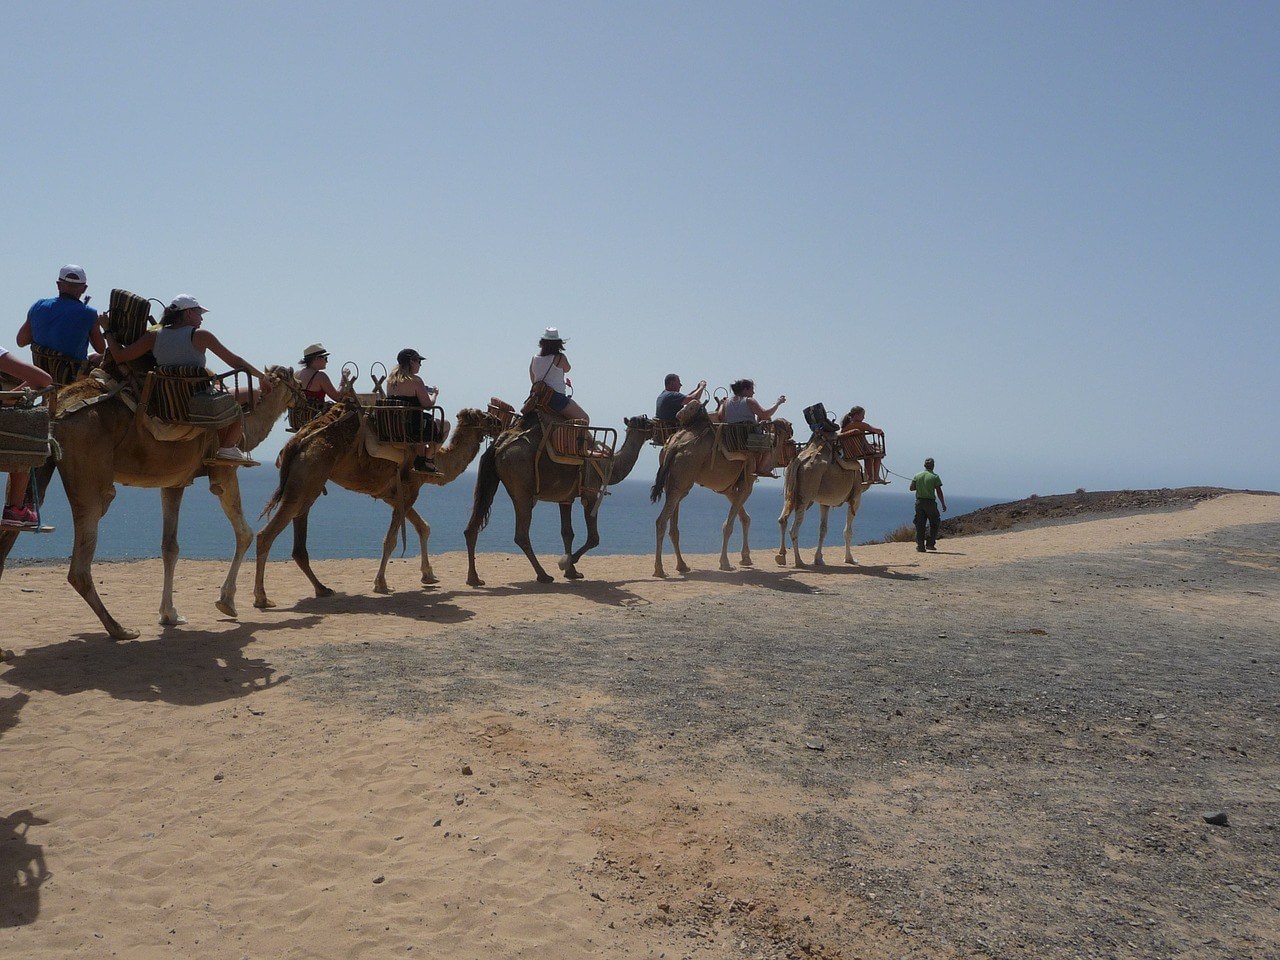 Camel caravan — back riding safari in the desert, africa.